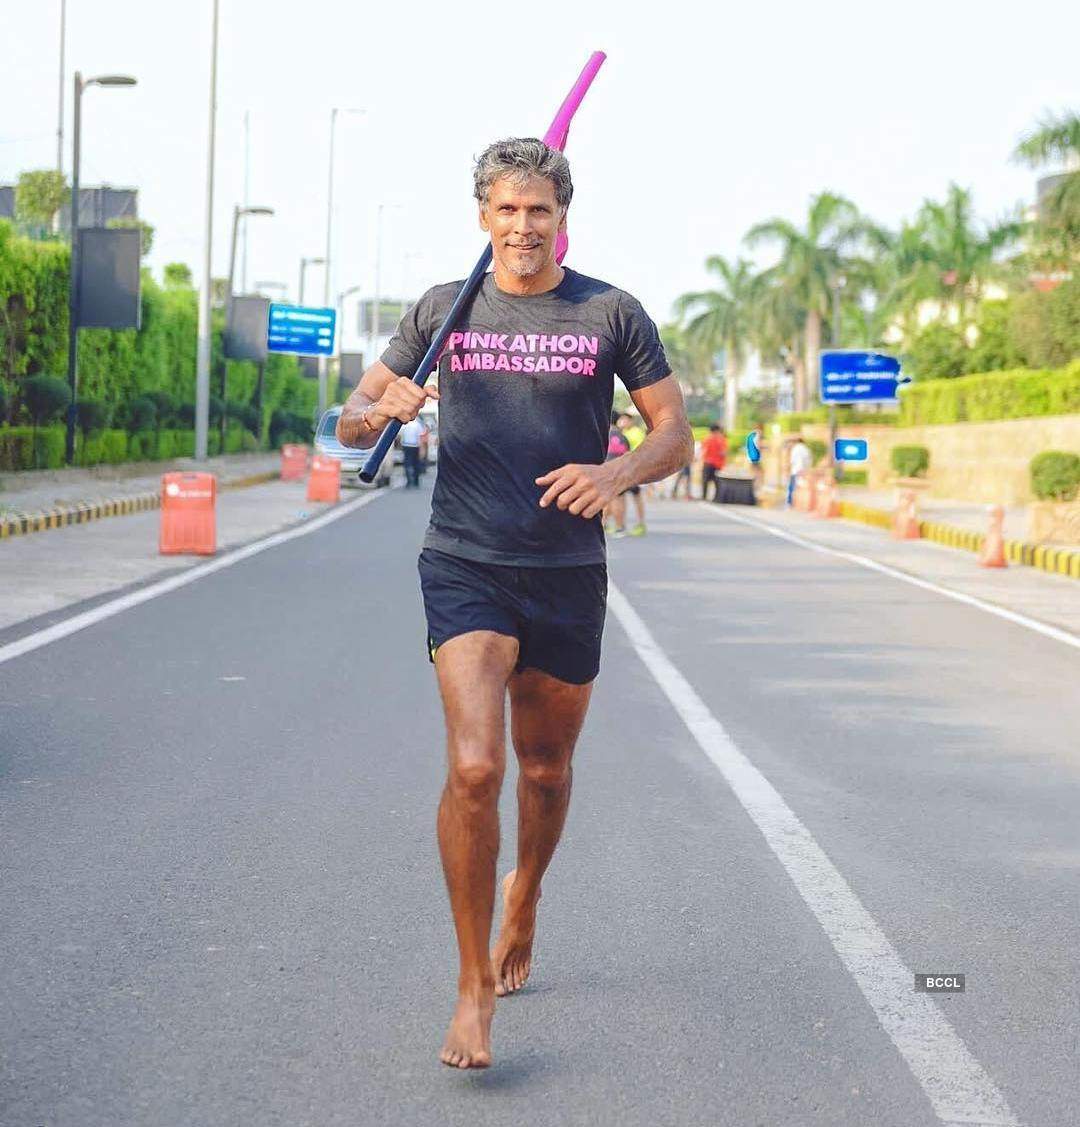 Milind Soman: From model to runner